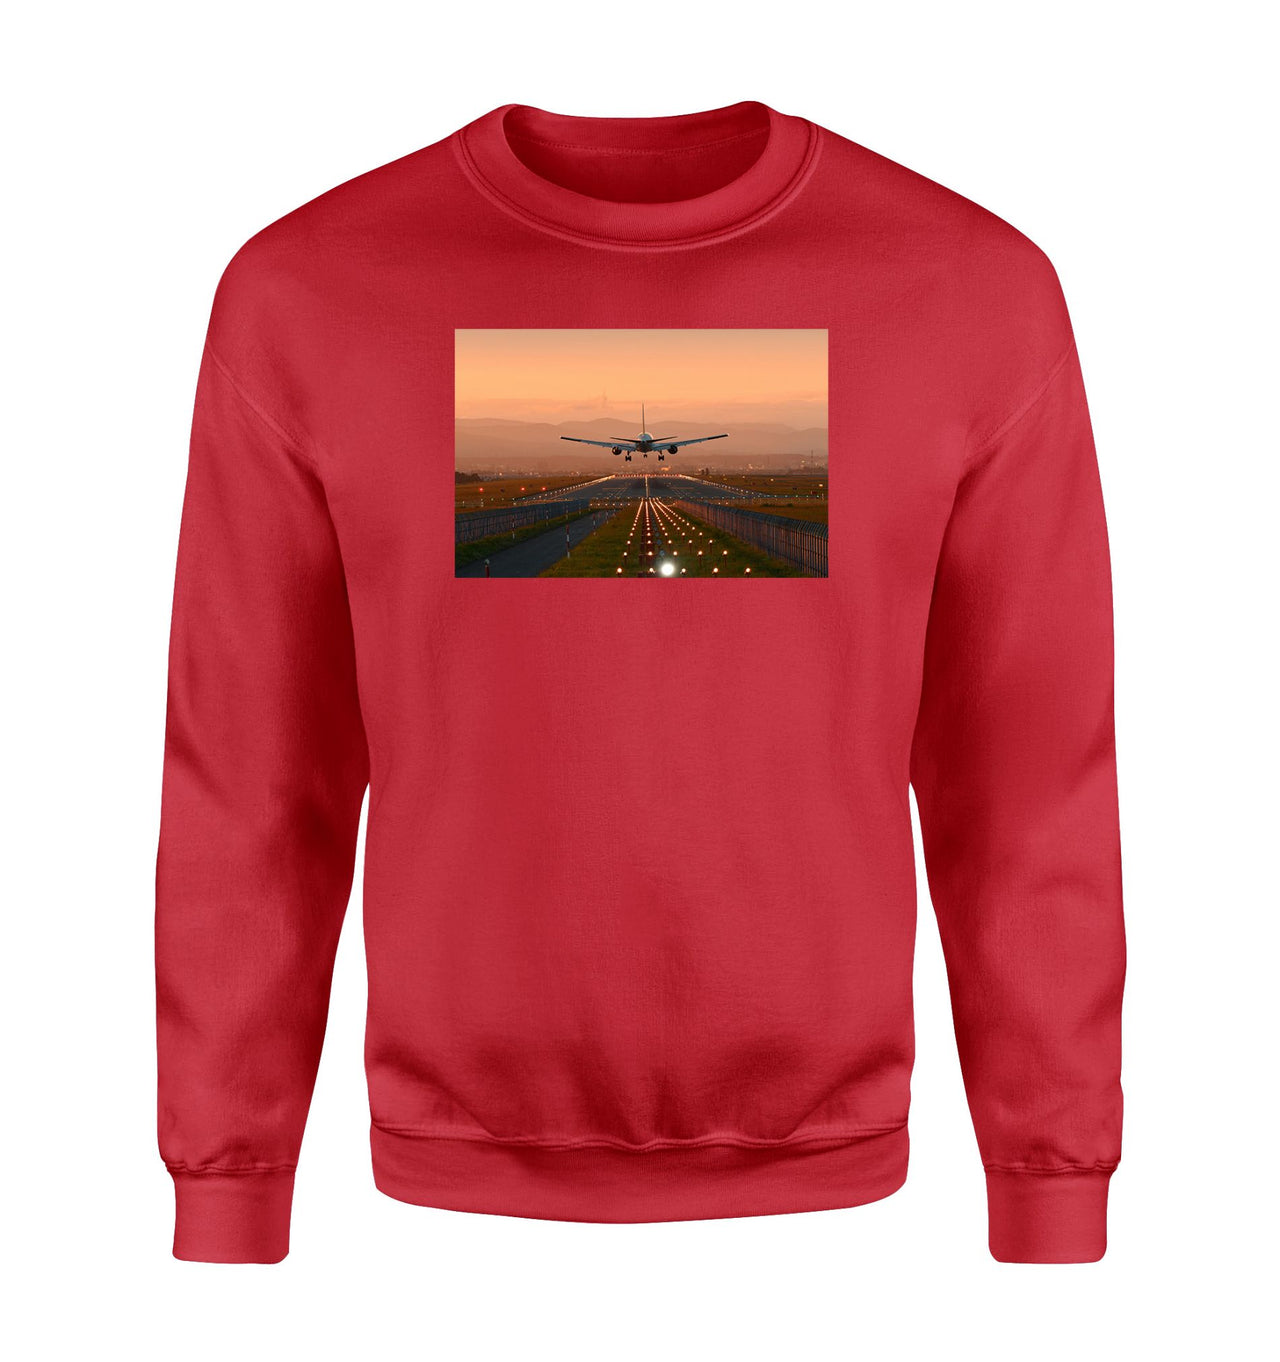 Super Cool Landing During Sunset Designed Sweatshirts